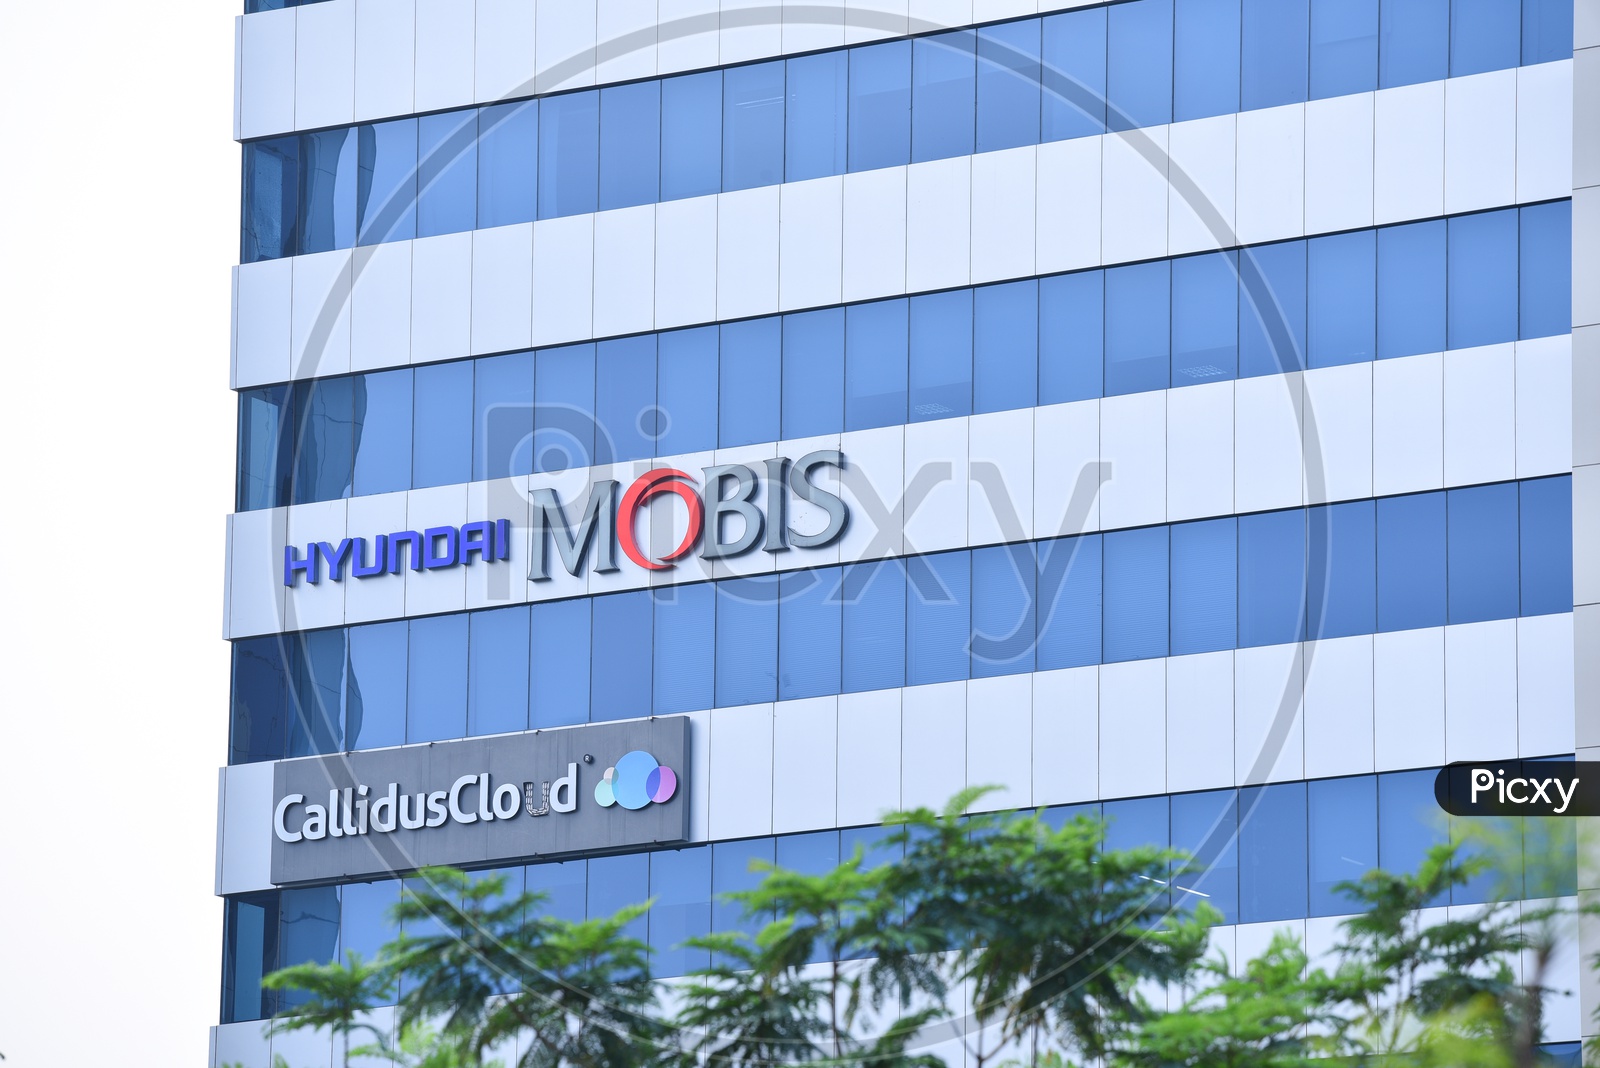 Hyundai , Mobis  and CallidusCloud  Name Board On Corporate Building